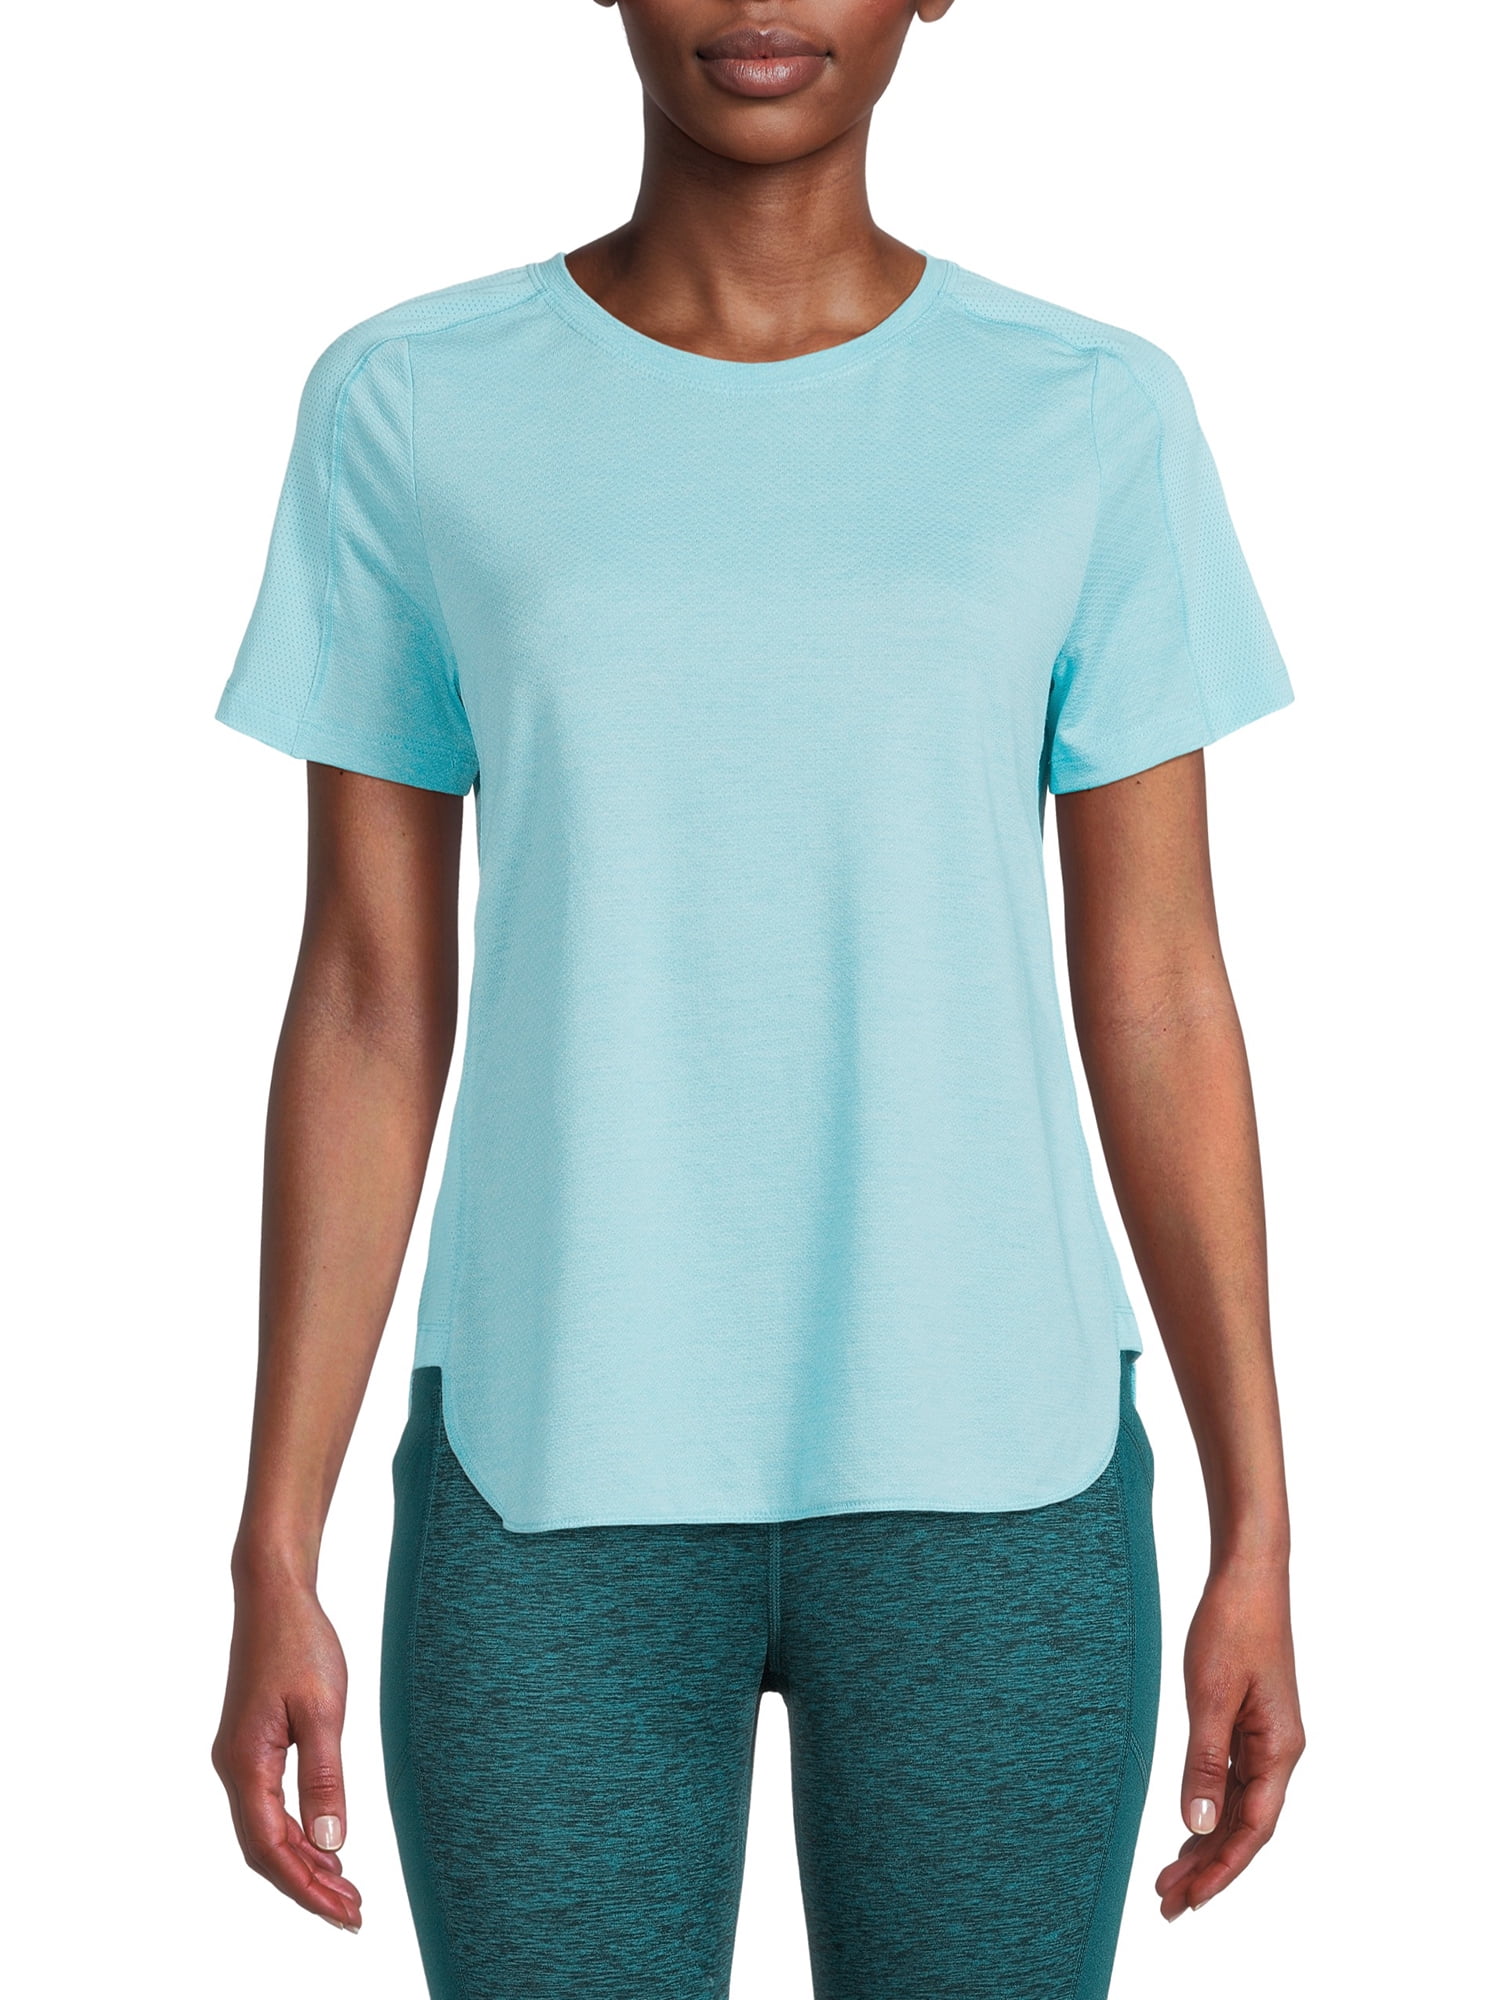 Avia Women's Short Sleeve Performance T-Shirt 